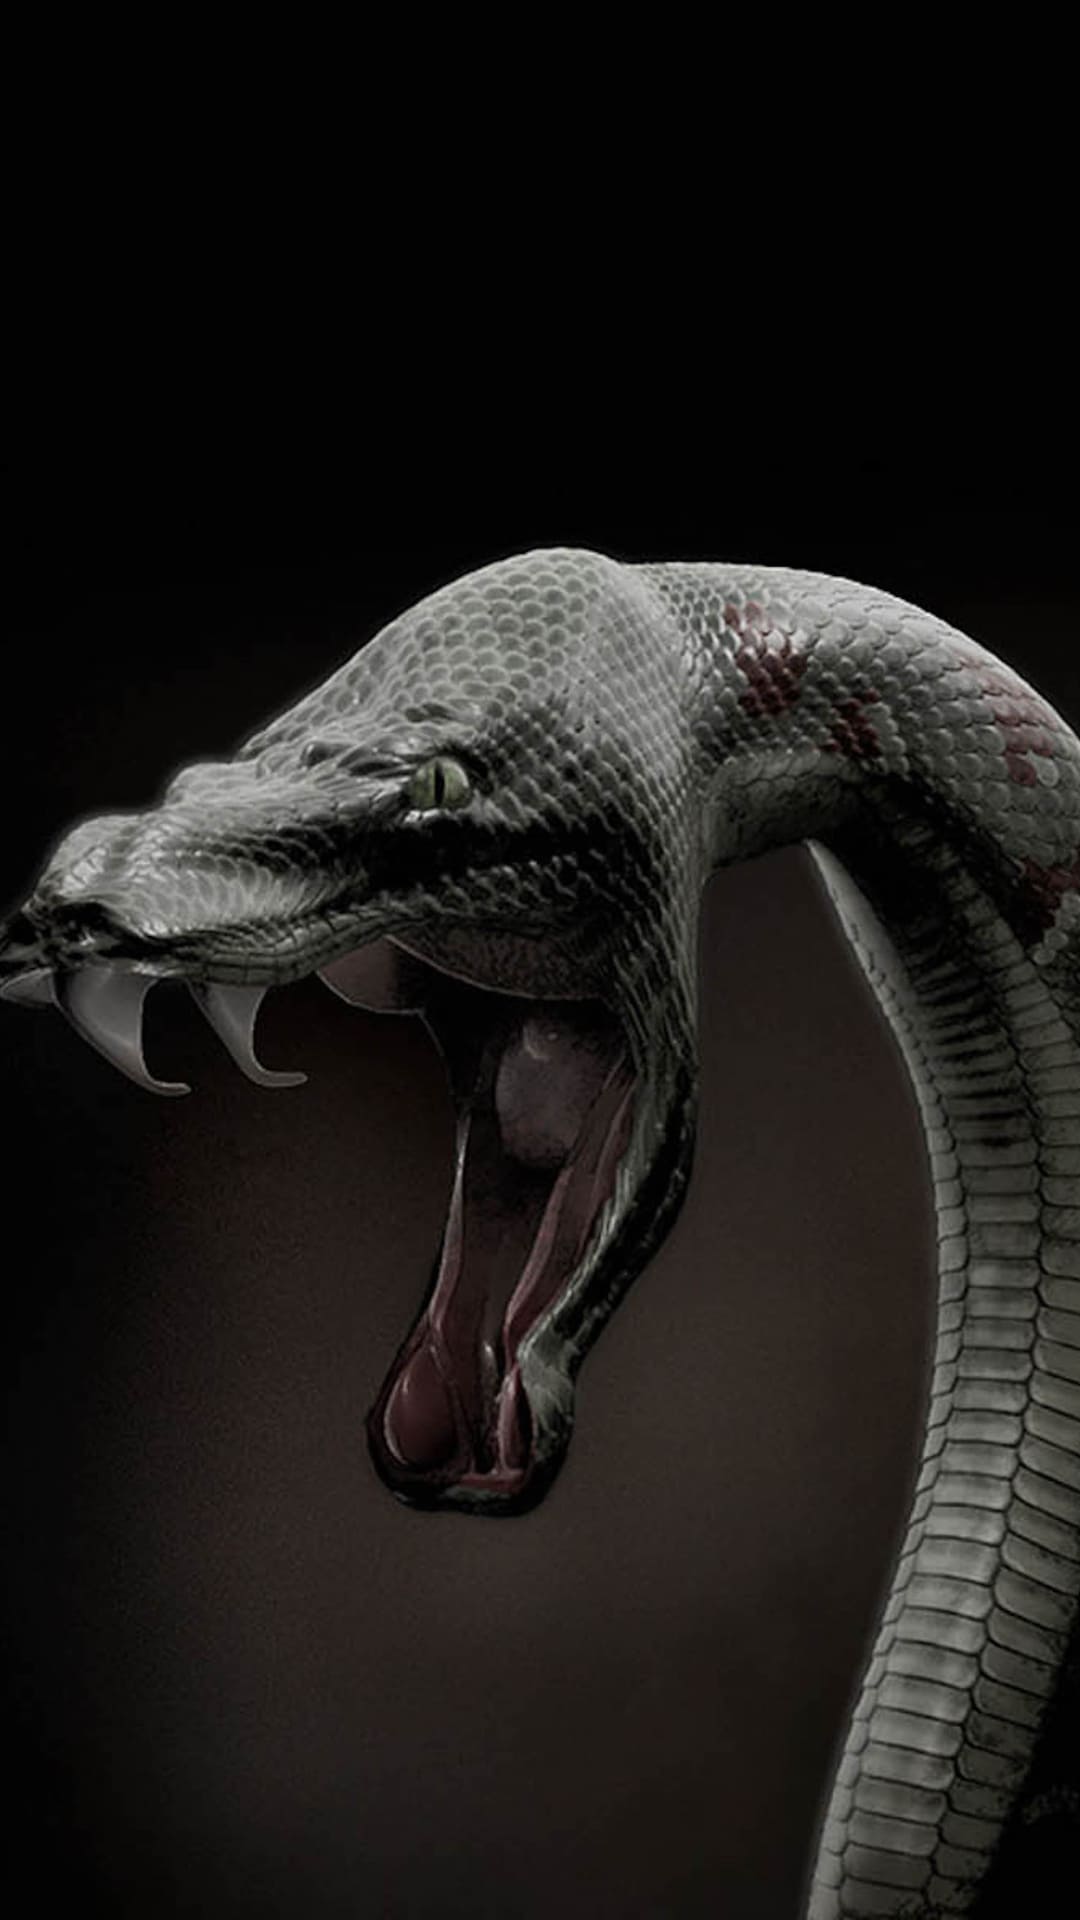 Snake Wallpaper Best Quality Snake Background (HD, 4k)